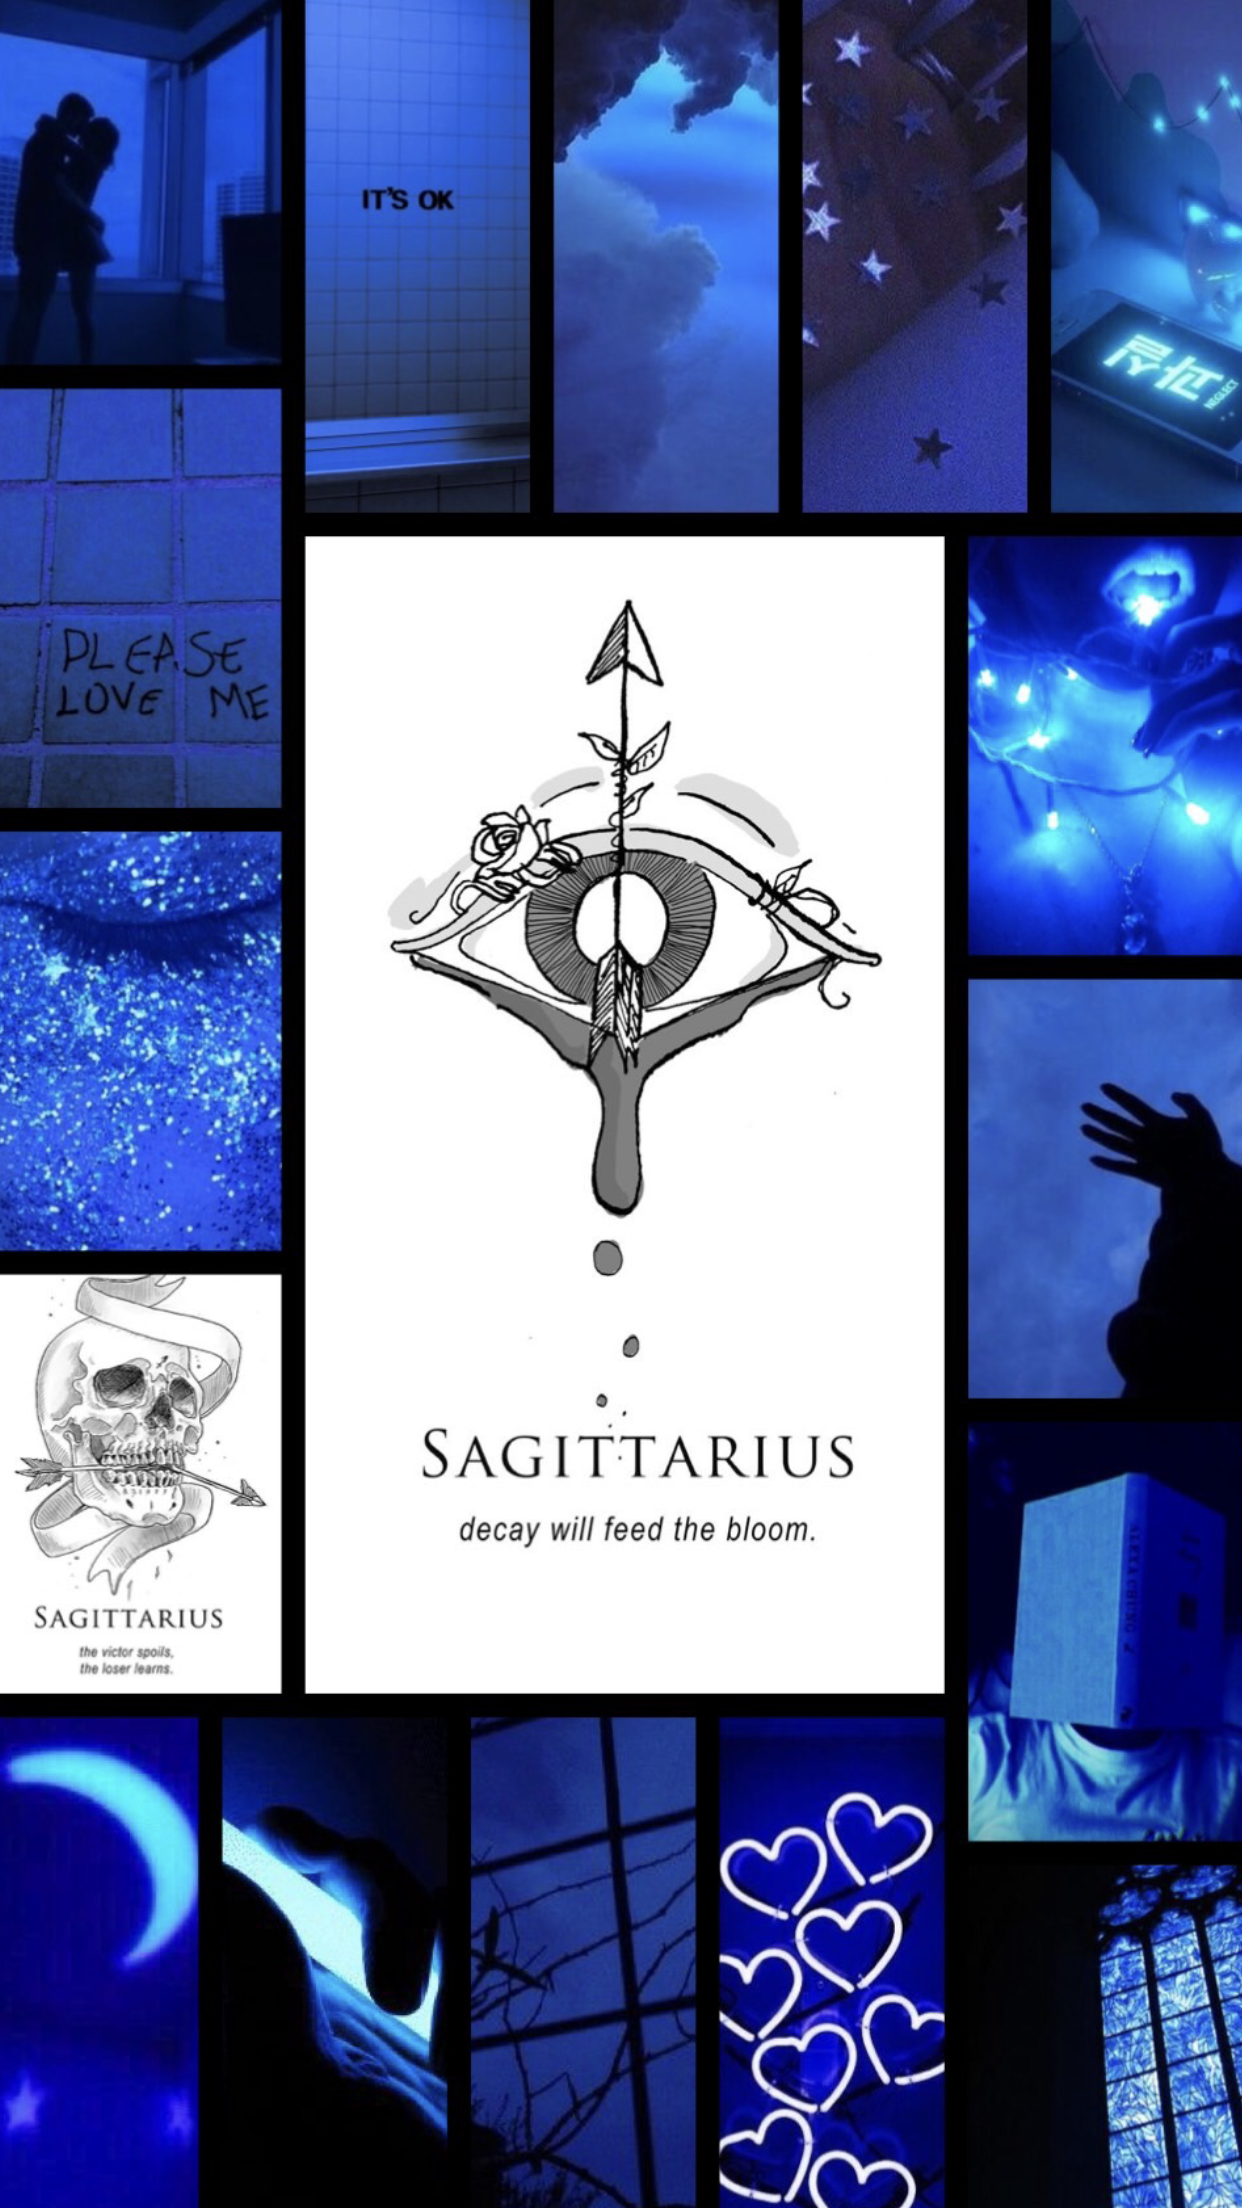 Sagittarius aesthetic wallpaper. Sagittarius wallpaper, Dark wallpaper iphone, Zodiac signs sagittarius